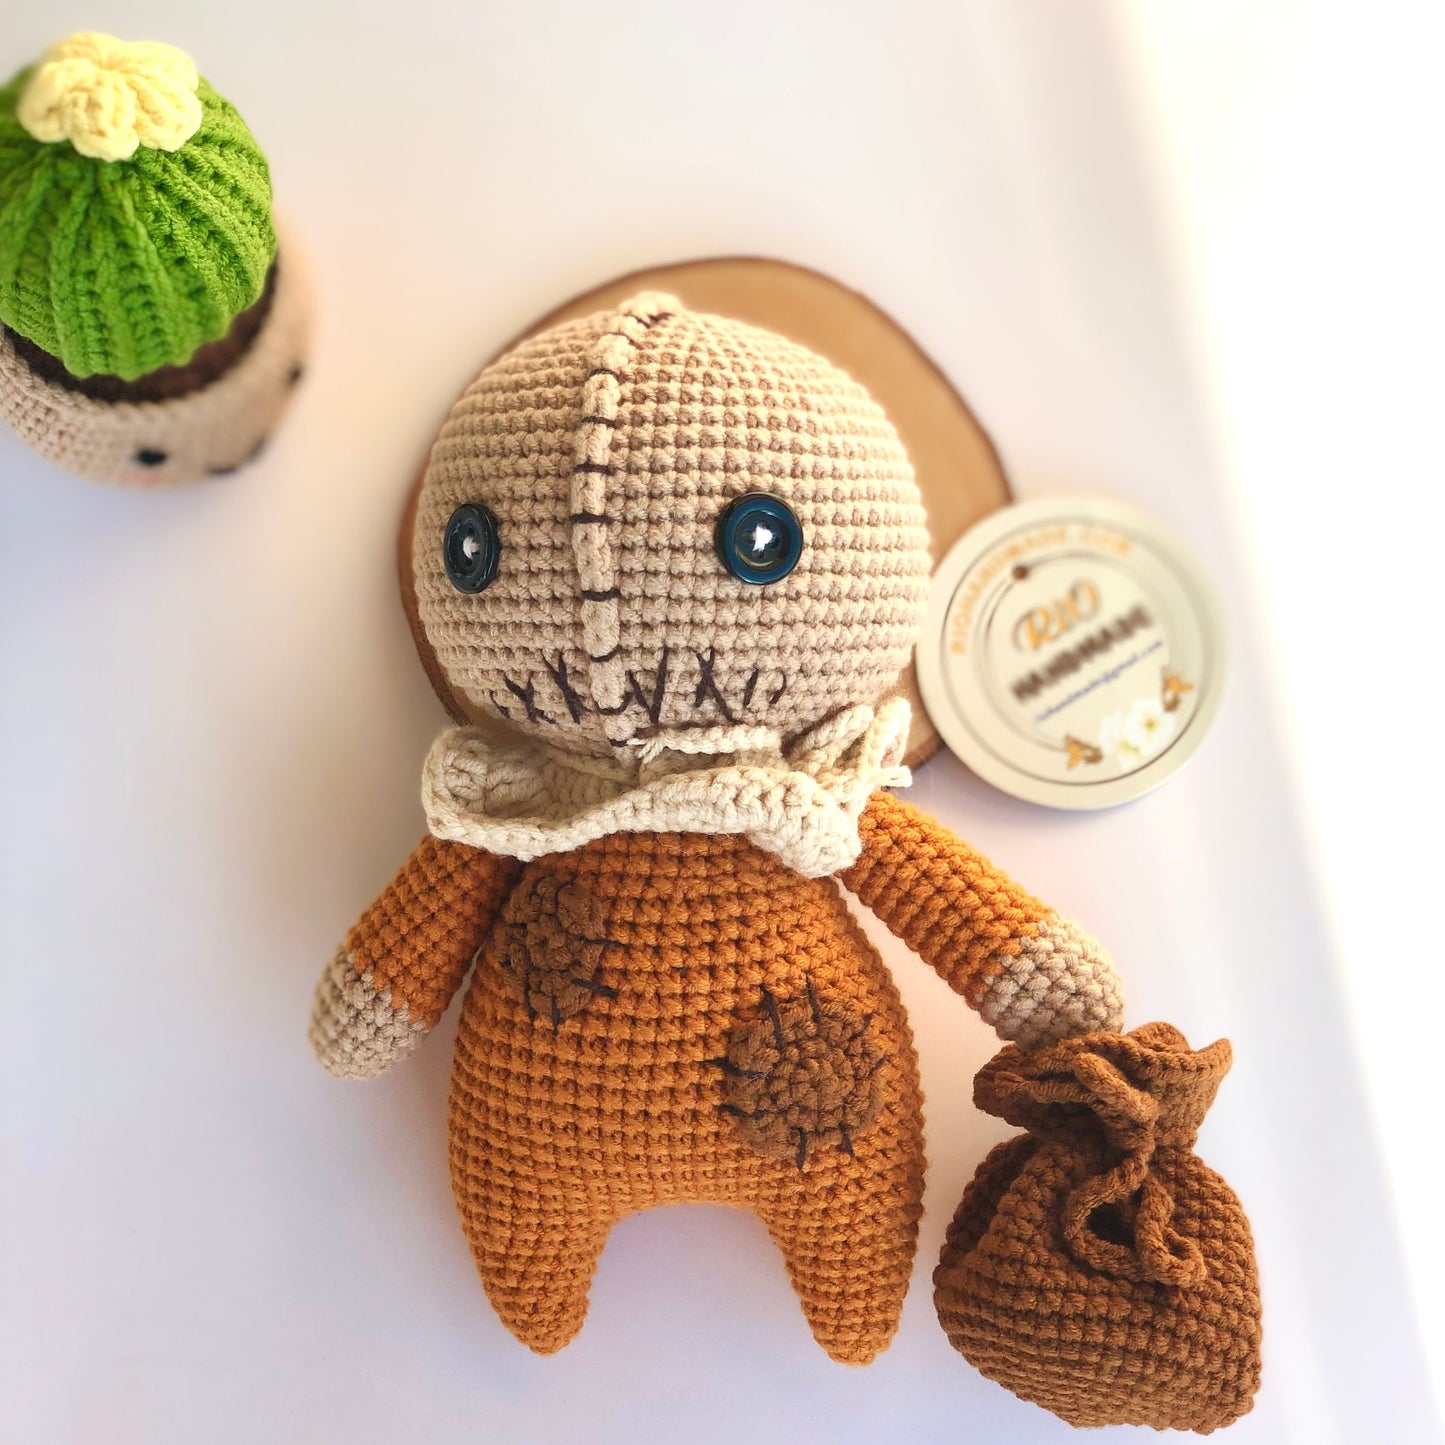 Ready To Ship, Crochet Sam doll (trick or treat), Amigurumi Sam inspired, Halloween decore dreams, Halloween Gift, Sam with bag